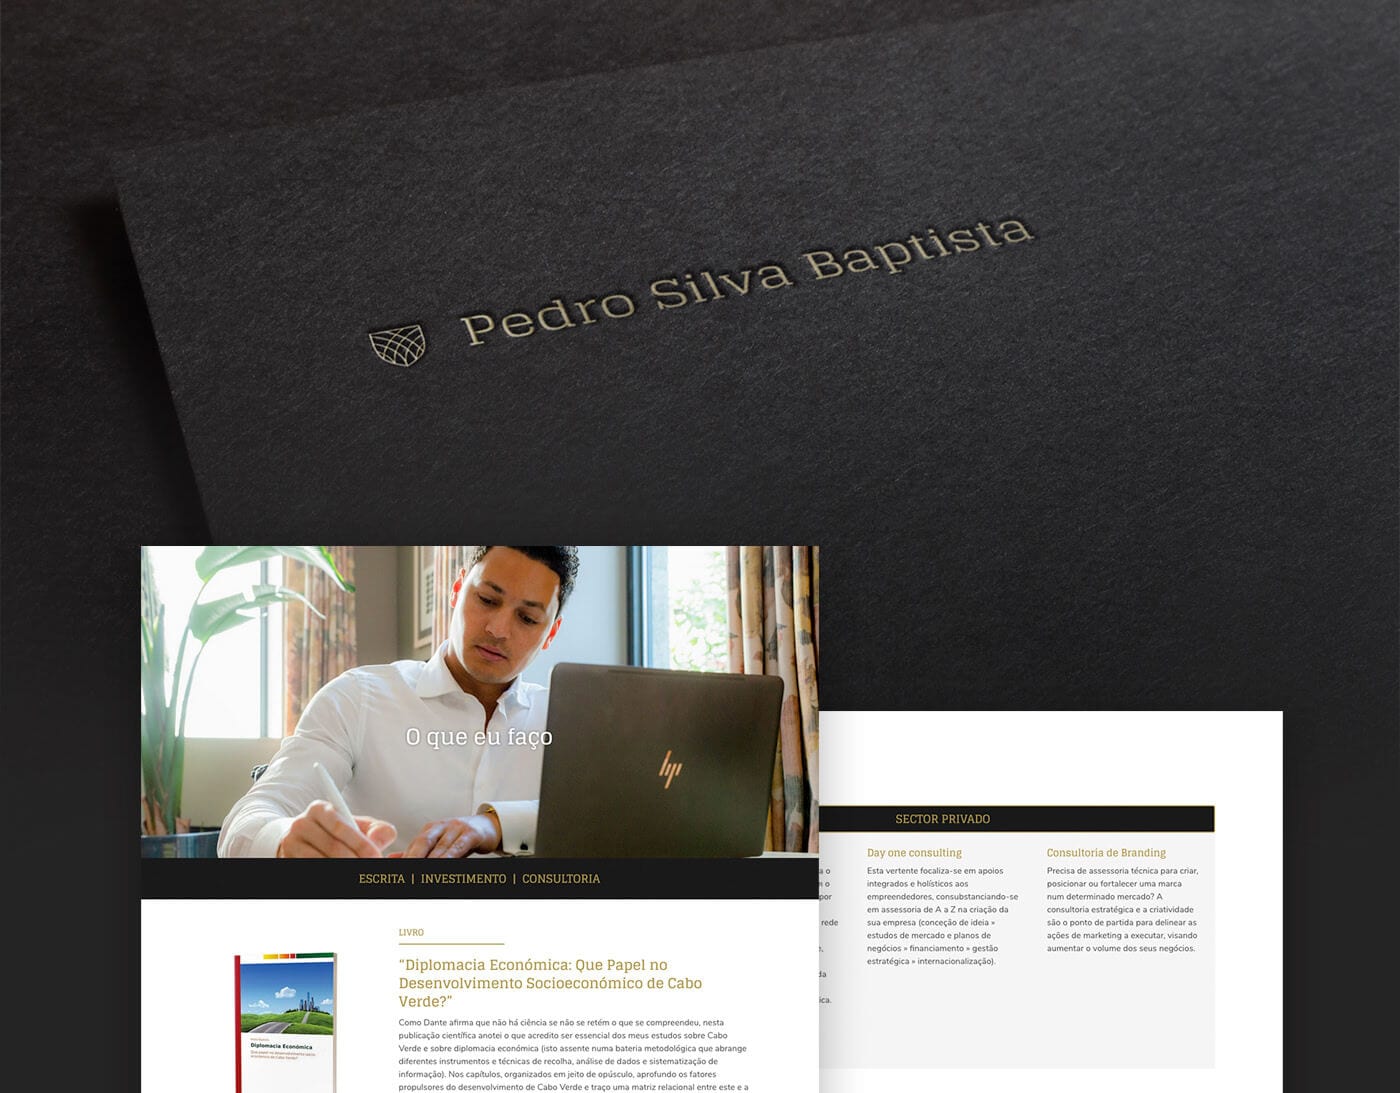 Pedro Silva Baptista, personal branding, elegant, logo, website